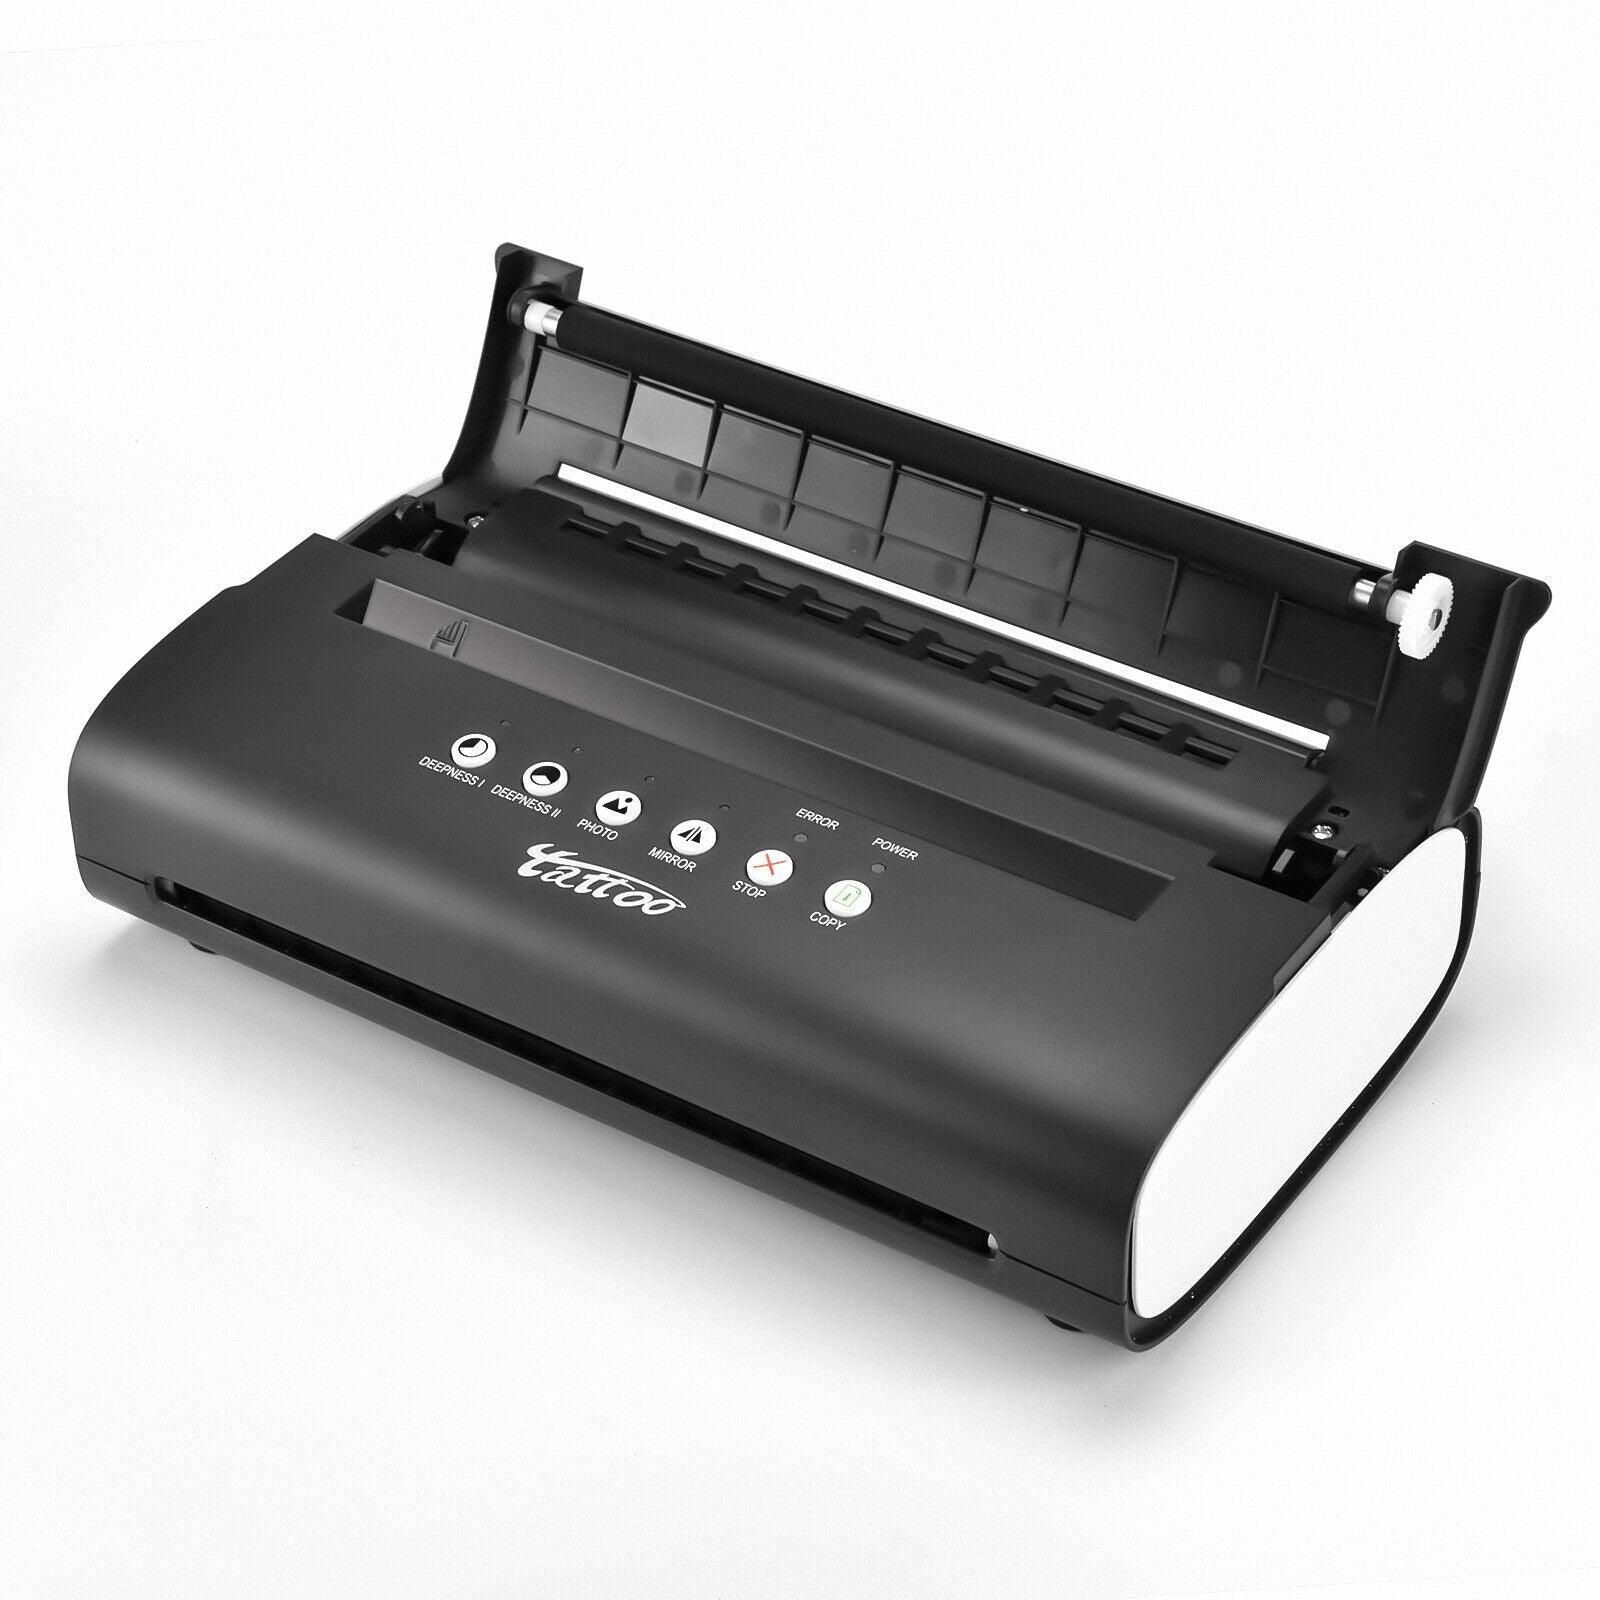 USB Potable Rechargeable Tattoo Transfer Stencil Machine Thermal Copier  Printer  eBay